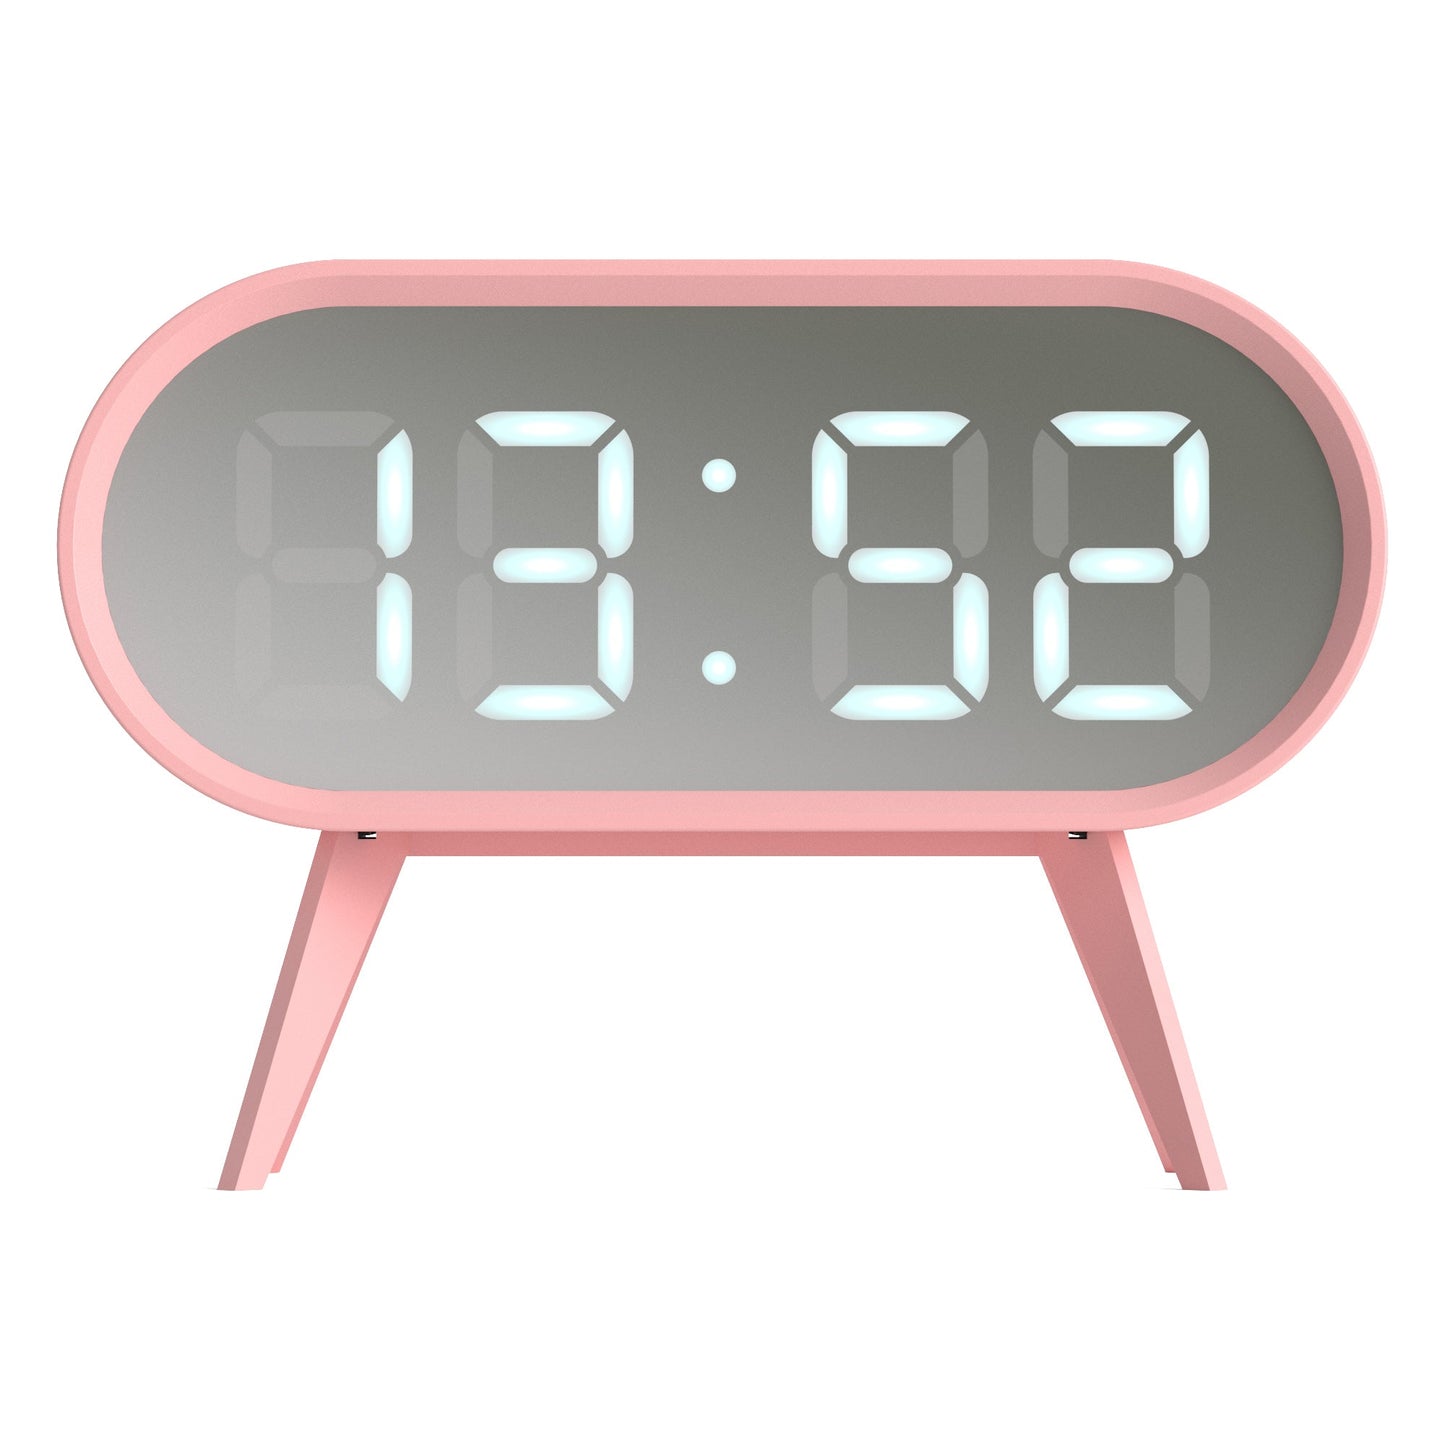 Newgate Space Hotel Cyborg Led Alarm Clock Pink - BM House & Garden